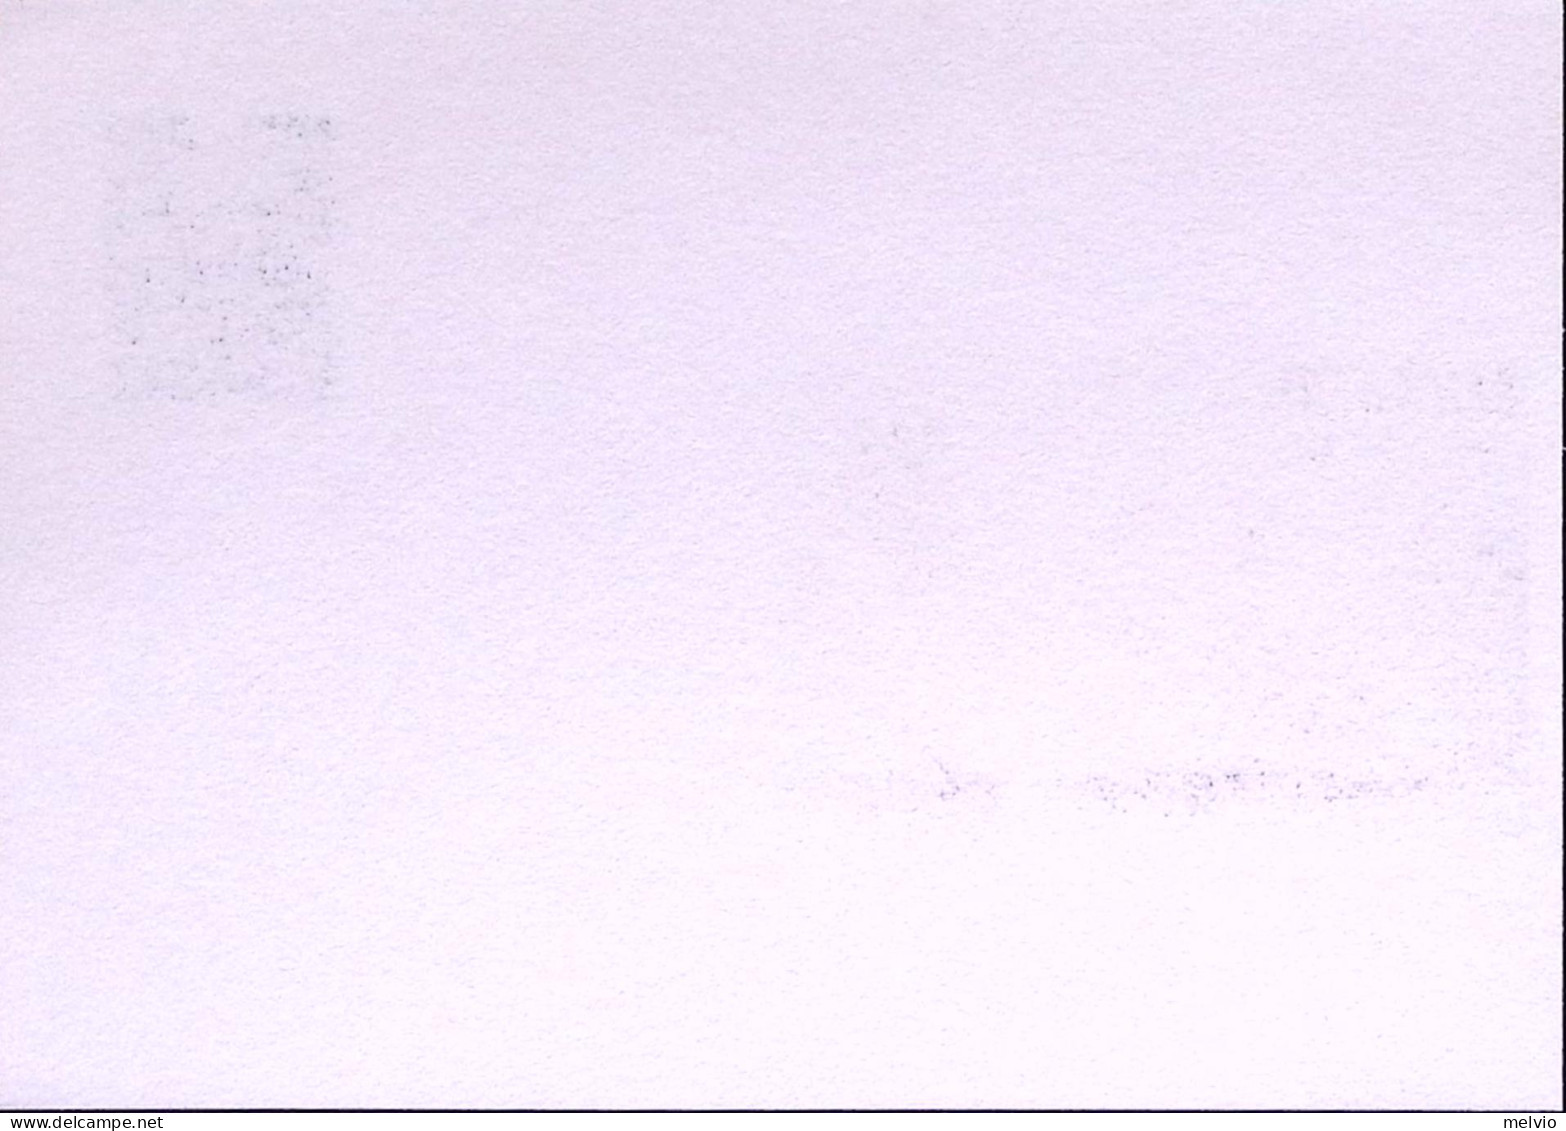 1992-Cartolina Postale Lire 700 Sopr. IPZS AMERICA'S CUP Nuova - Stamped Stationery